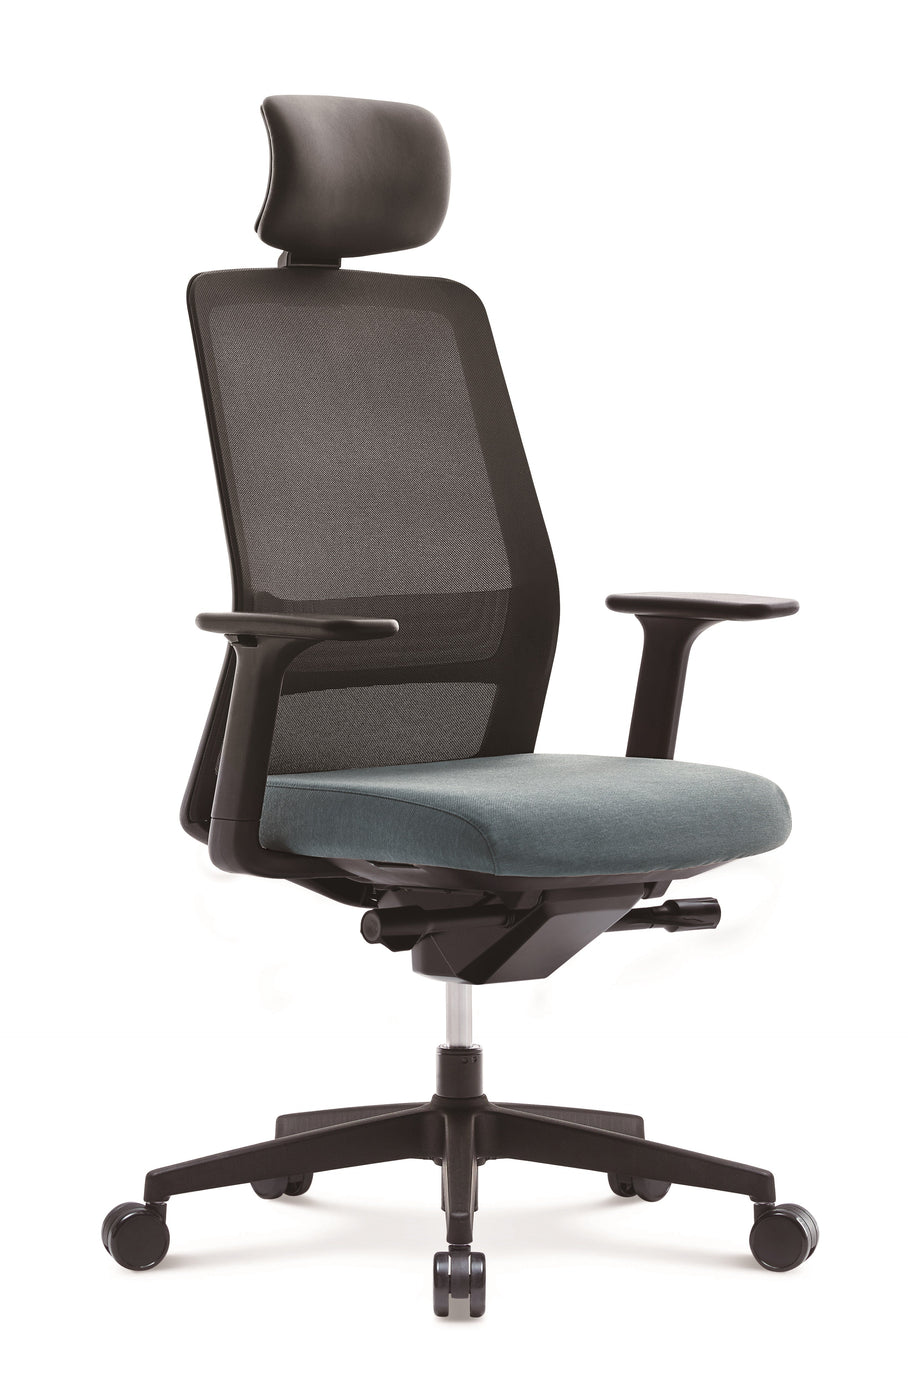 FURSYS SIDIZ T40 Black Frame Home Office Desk Chair with Headrest - SIHOO AustraliaFURSYS SIDIZ T40 Black Frame Home Office Desk Chair with Headrest